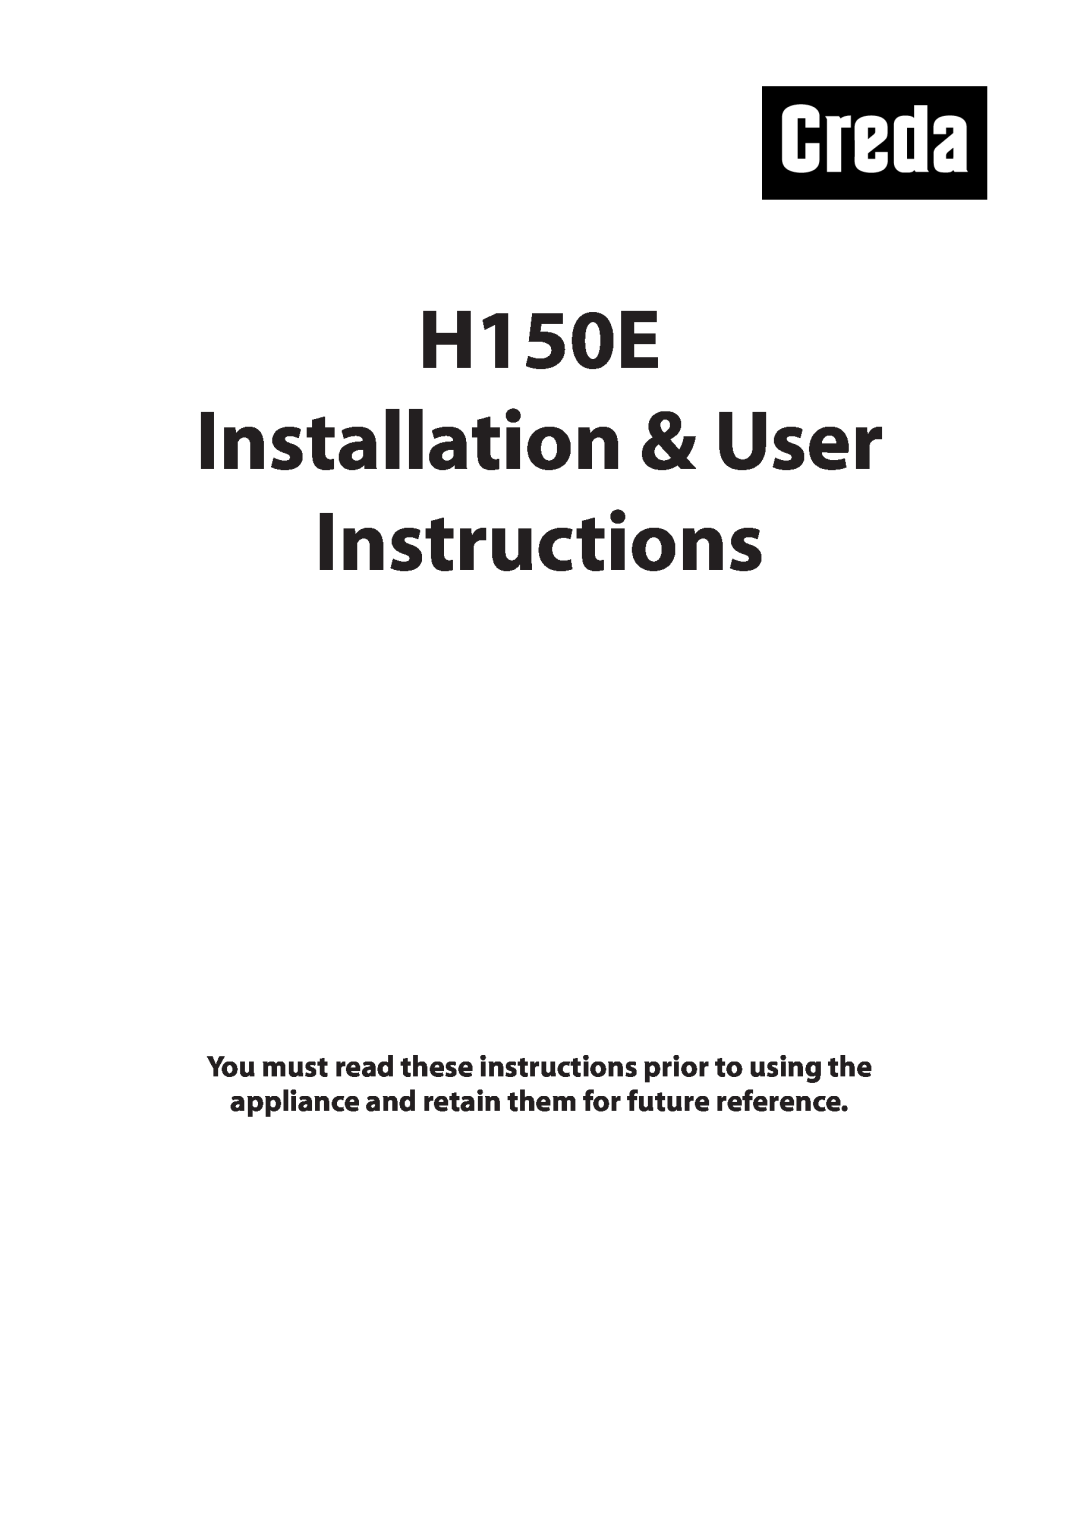 Creda manual H150E Installation & User Instructions 